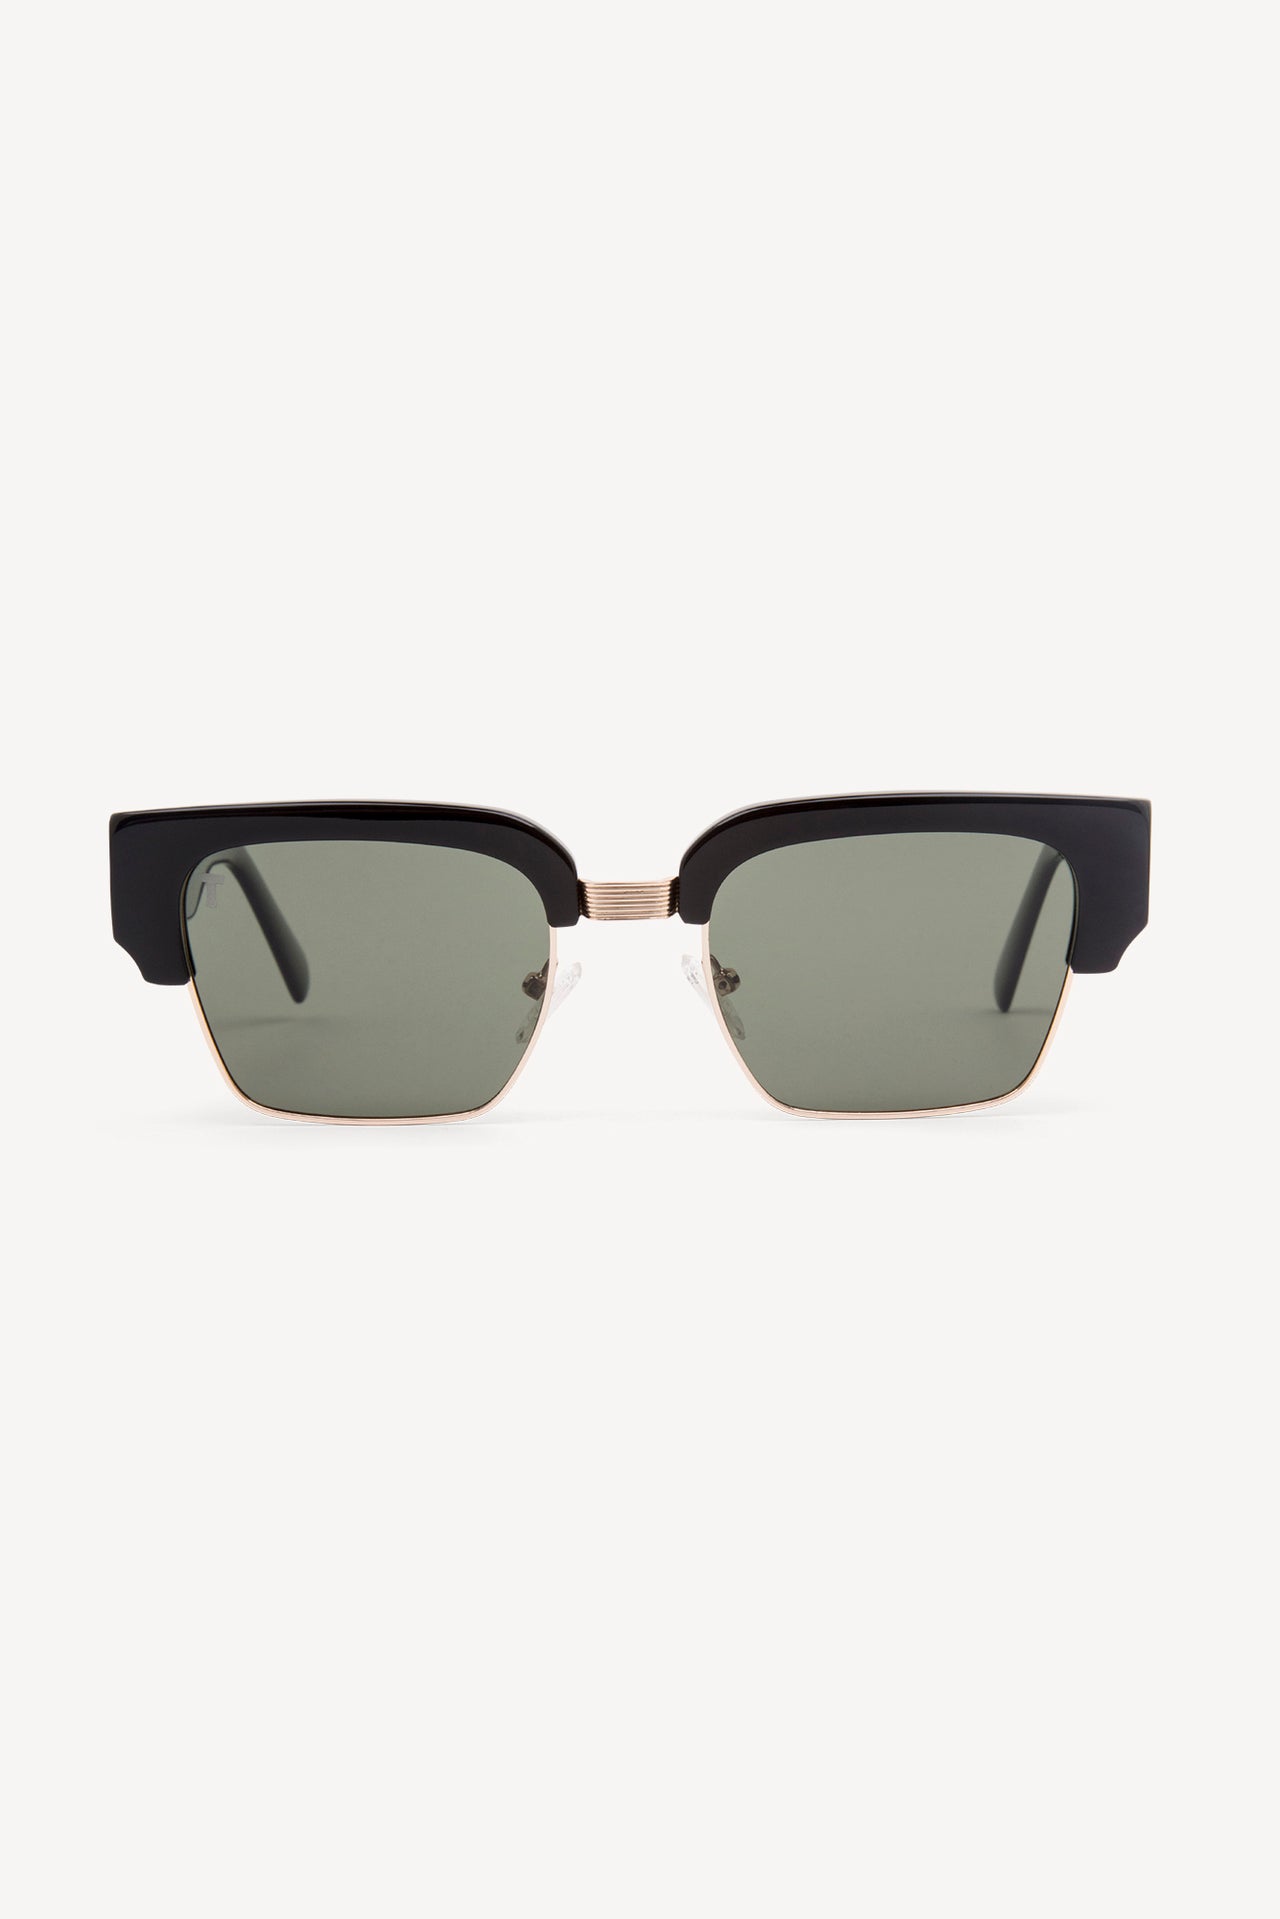 TOATIE Monte Carlo Sunglasses BLACK/GREEN